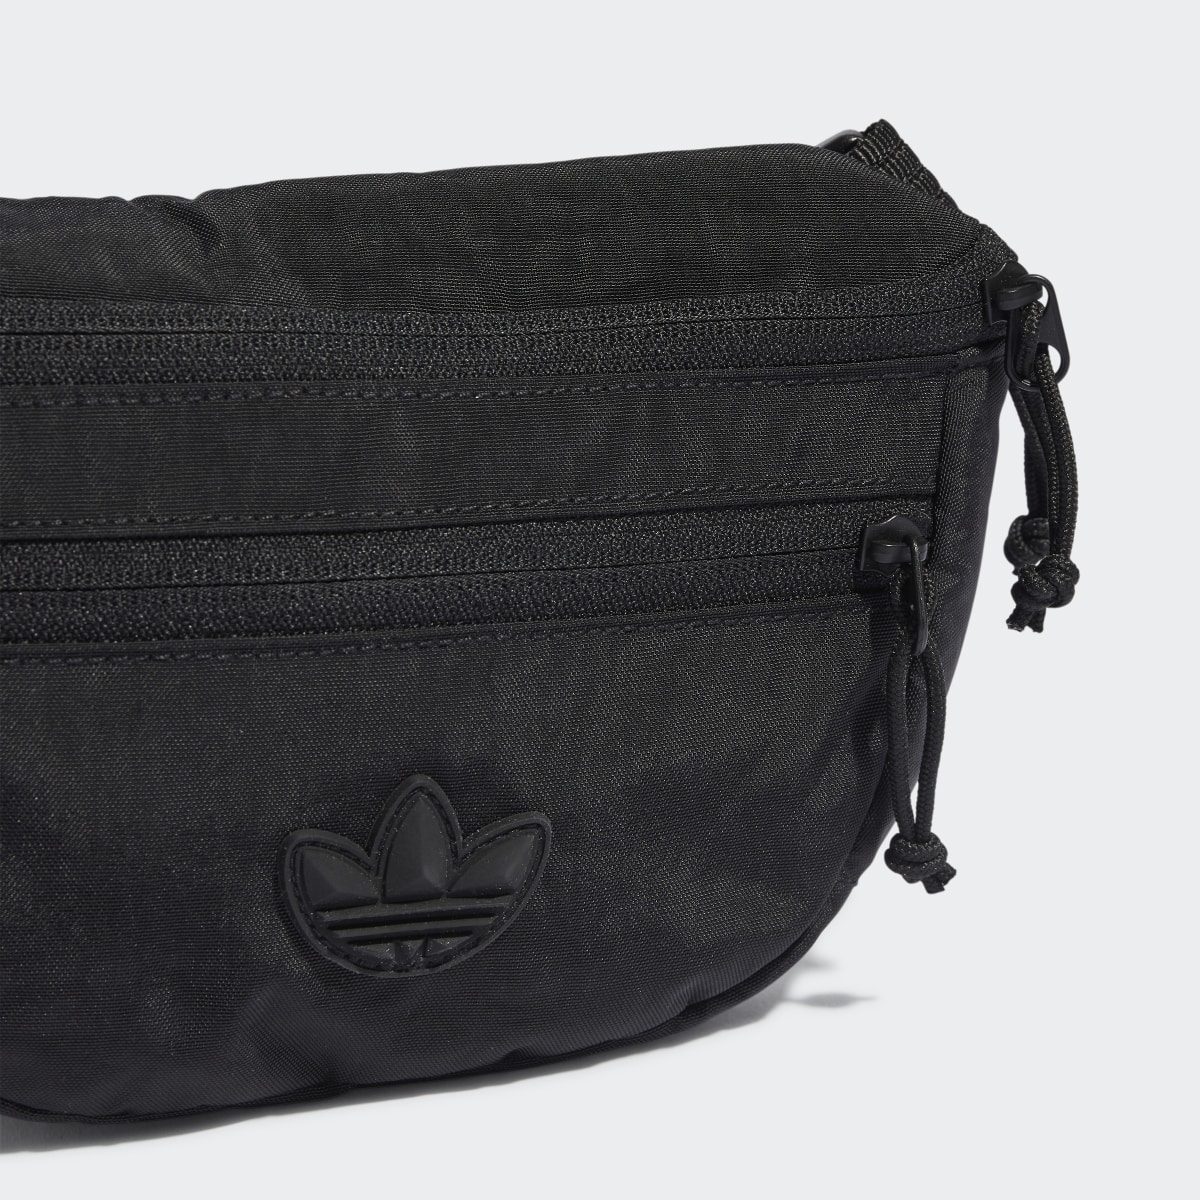 Adidas Adventure Waist Bag. 6